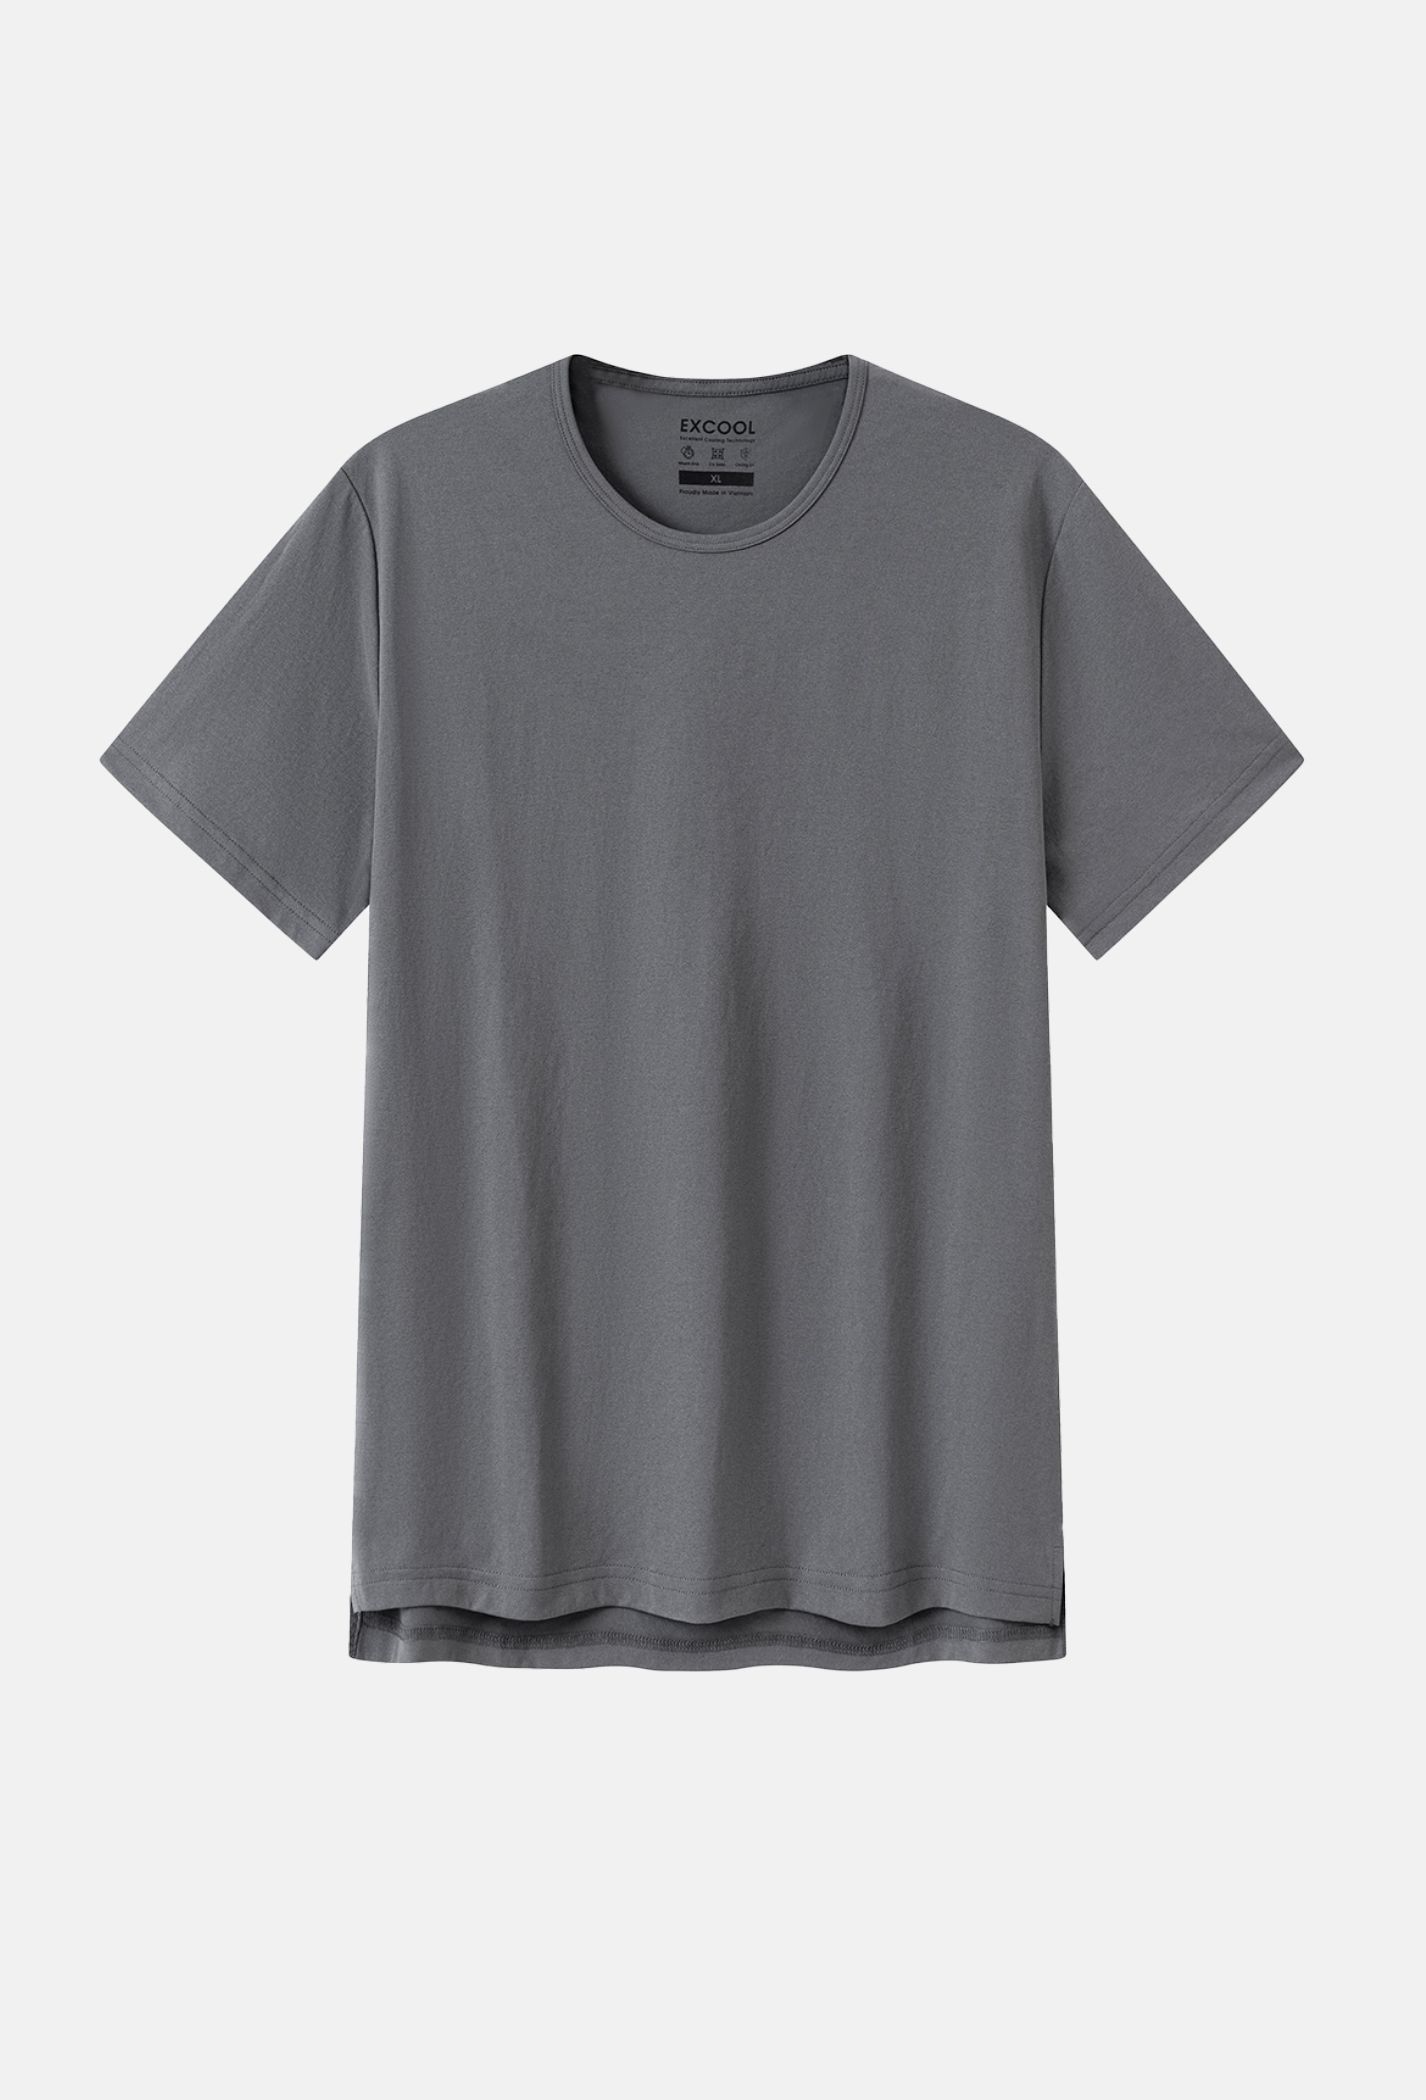 T-Shirt Excool cổ tròn  1